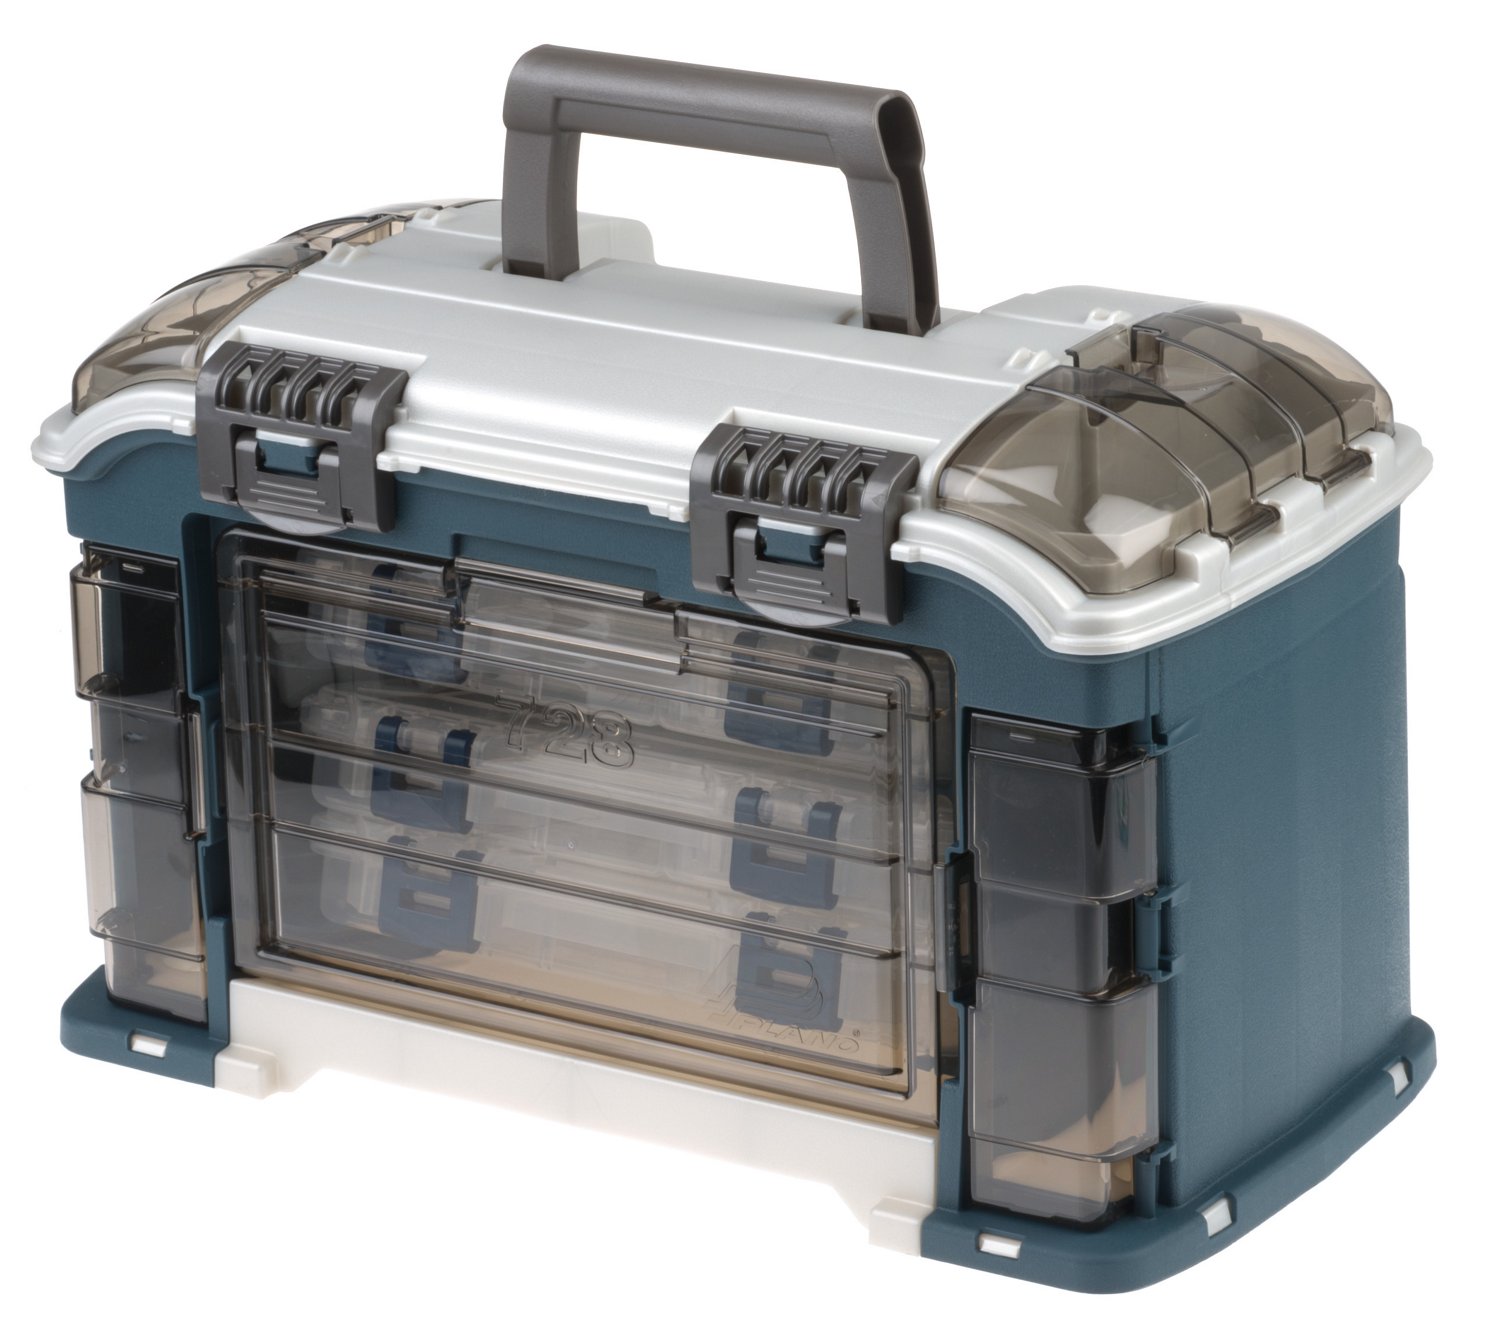 Plano Tackle System Box, Premium Tackle Storage Blue/Silver